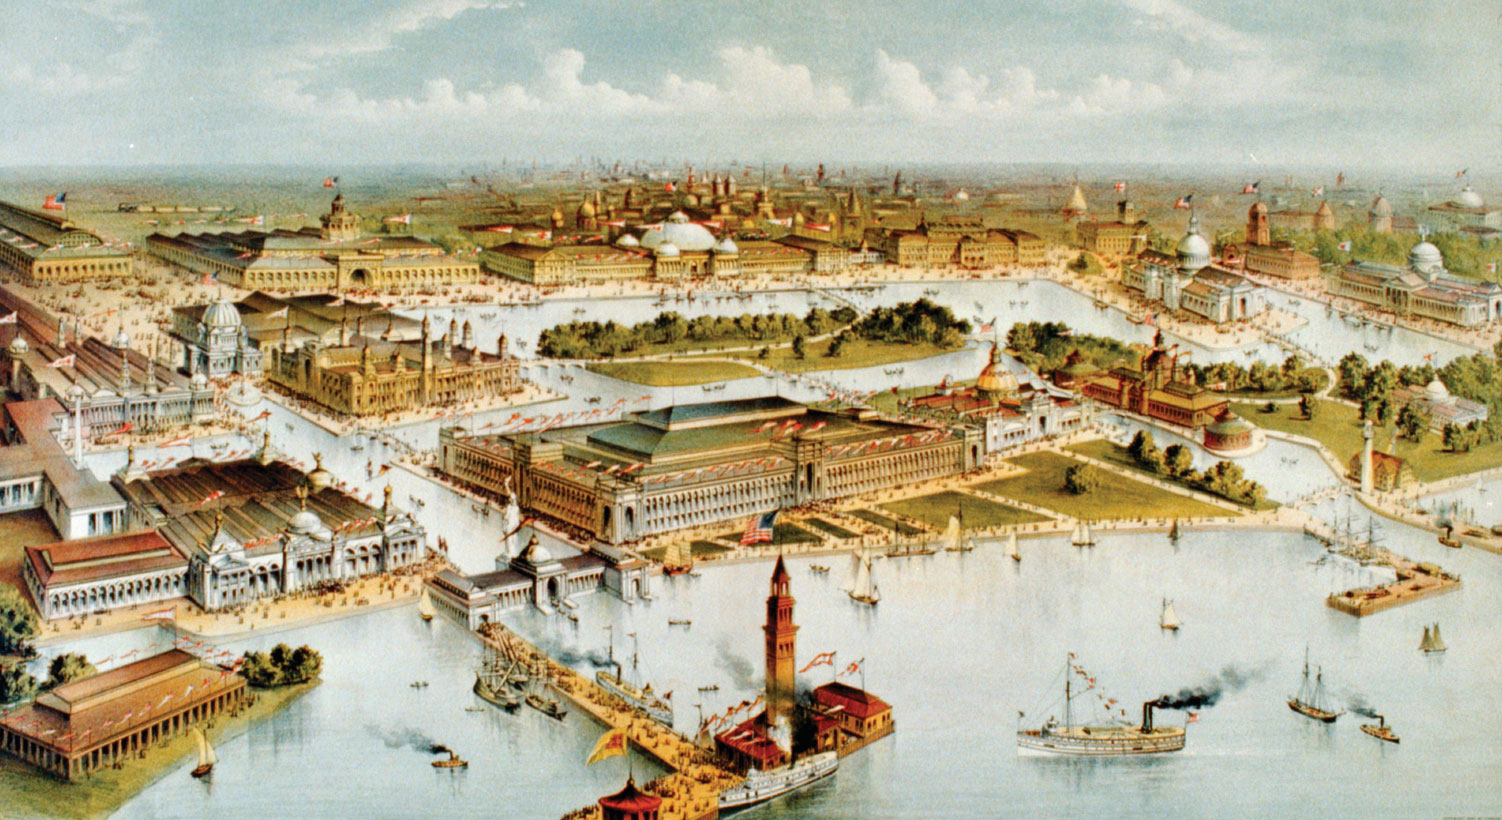 Panorama da feira mundial de Chicago de 1893